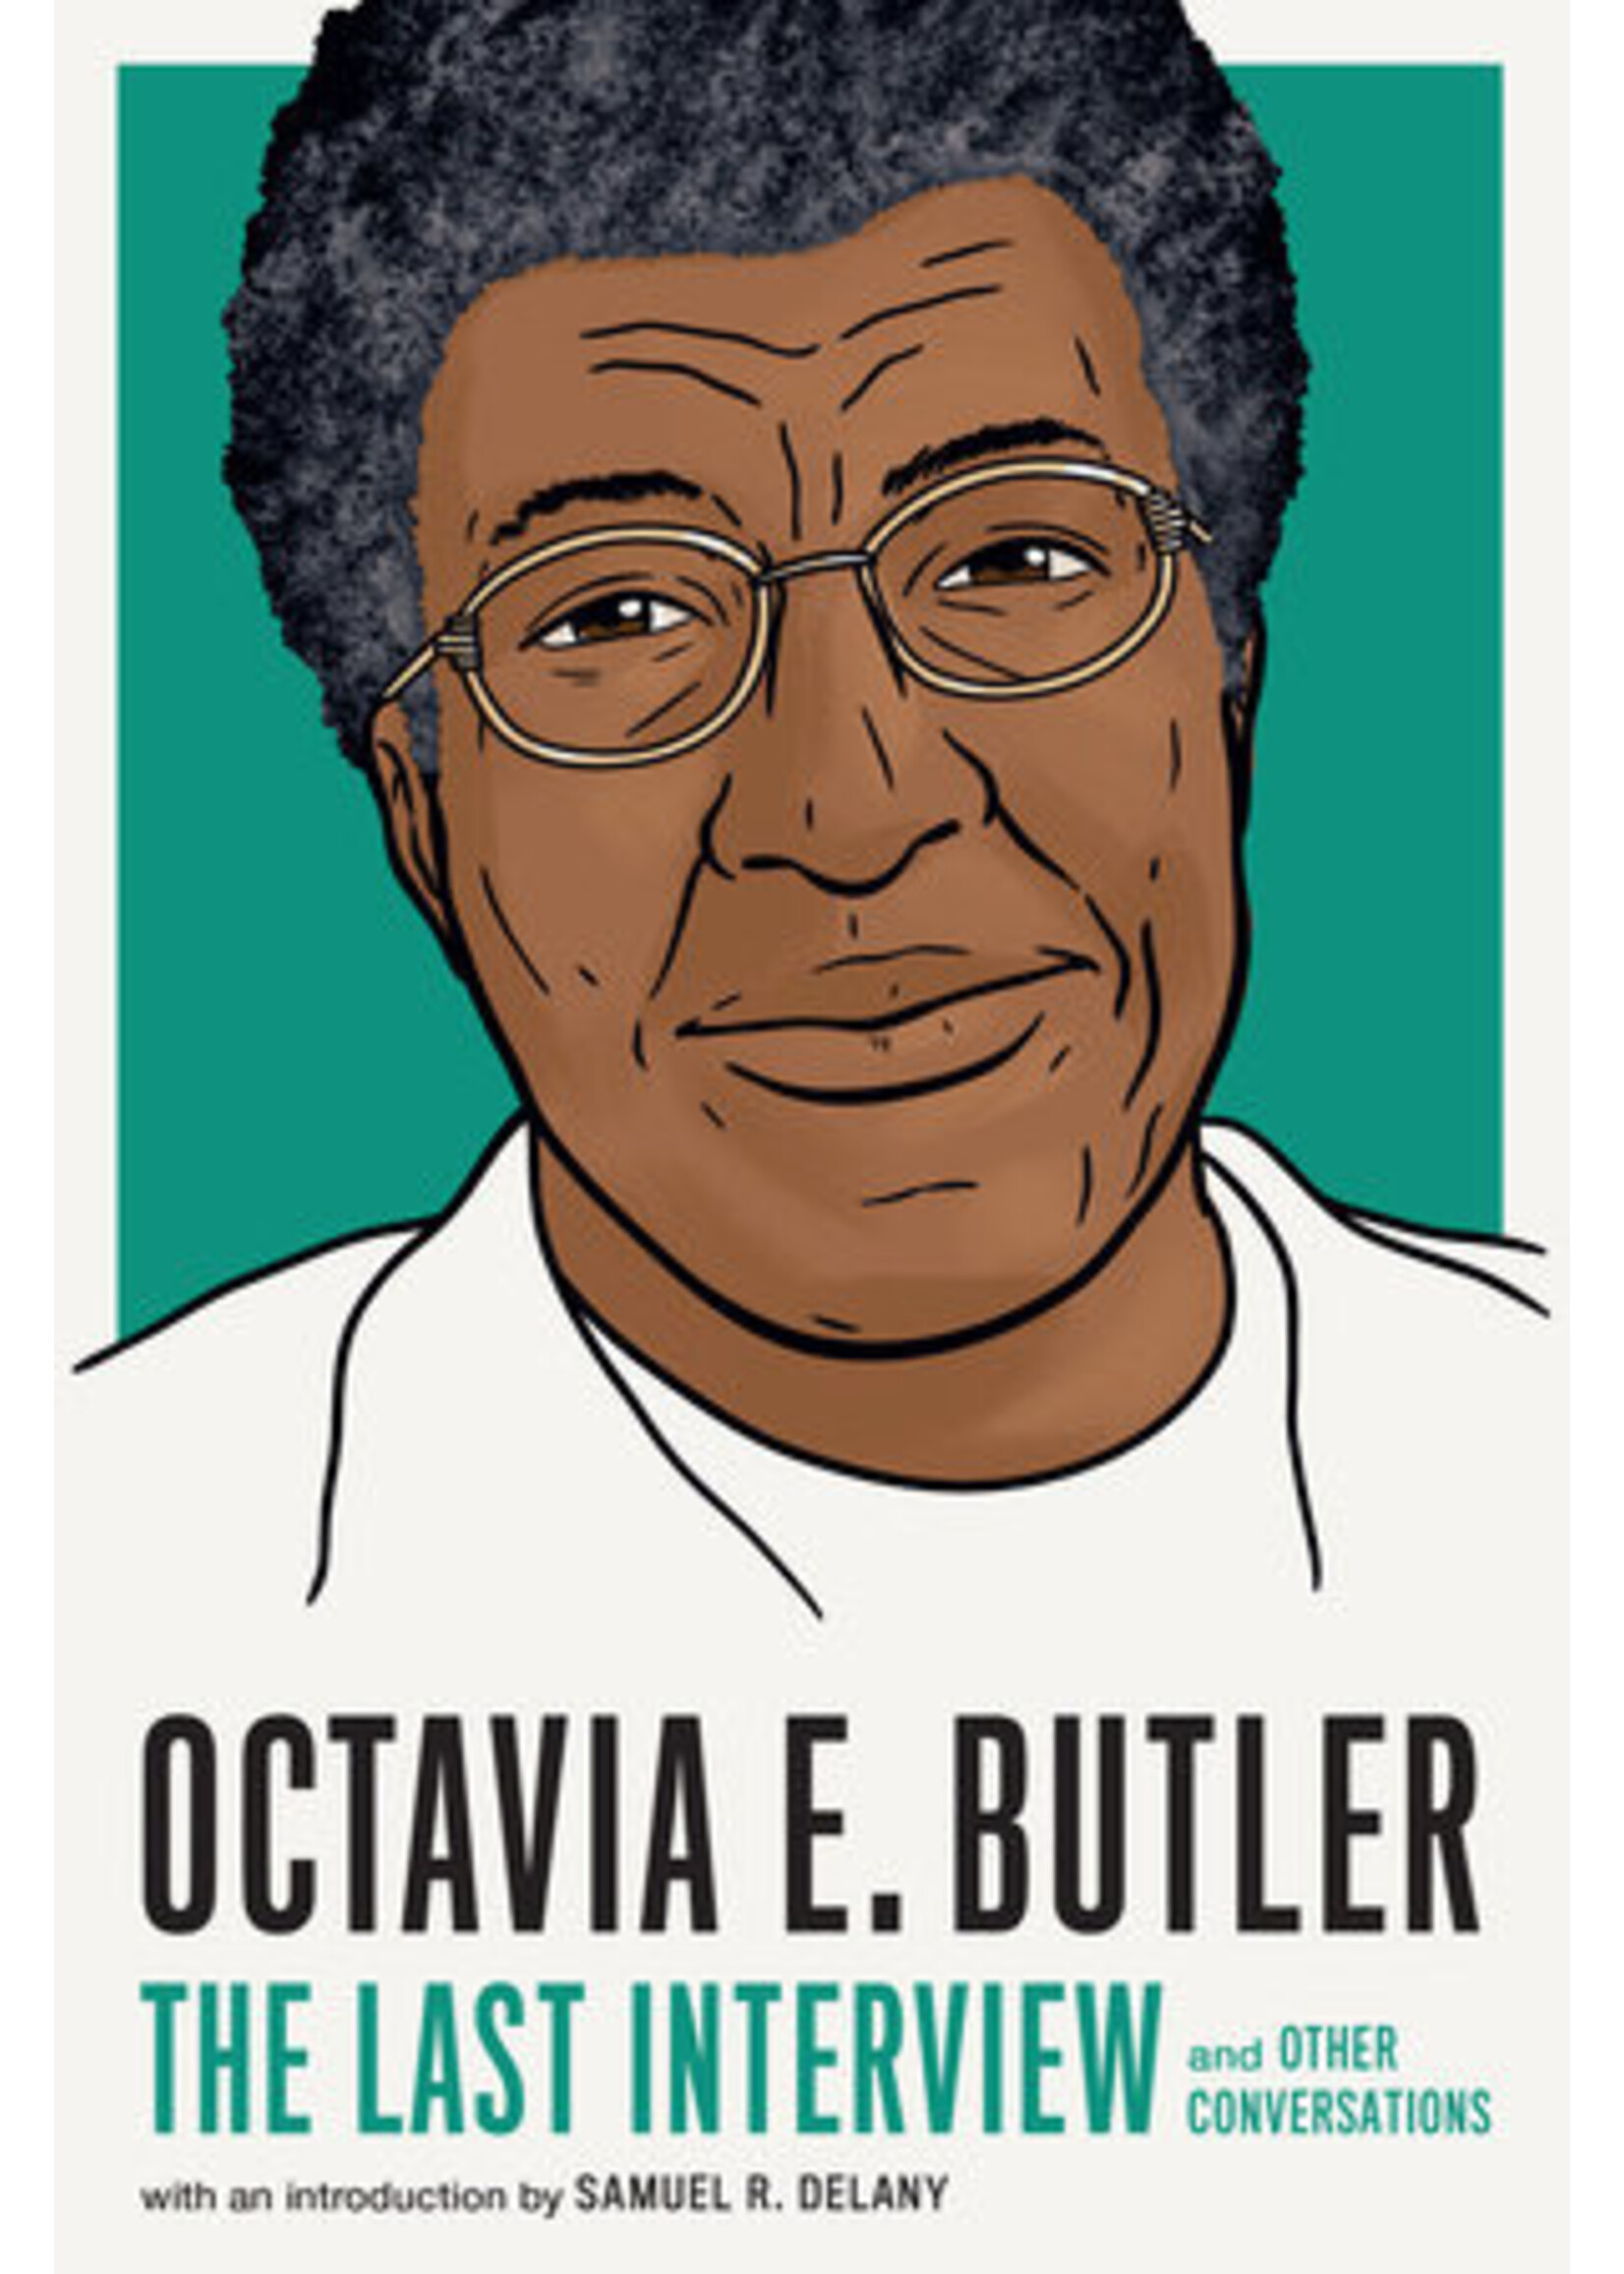 Octavia E. Butler: The Last Interview